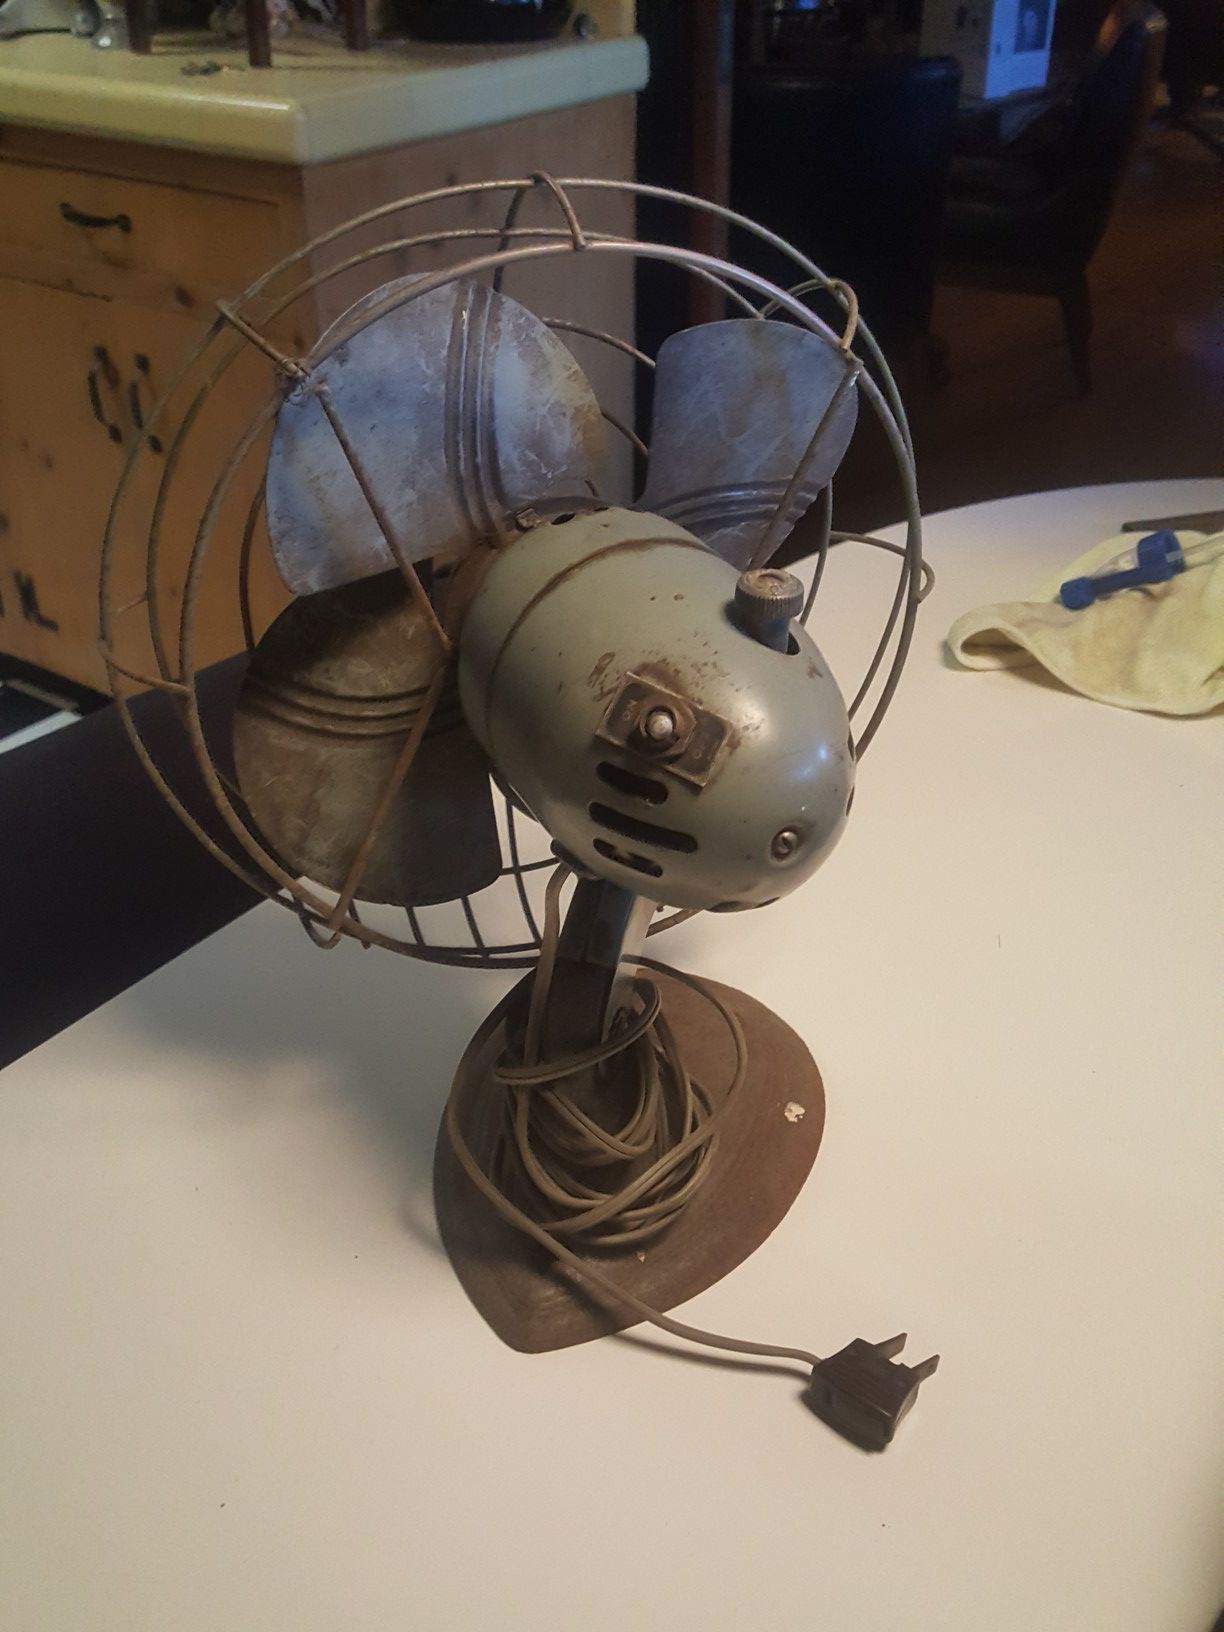 Antique table fan